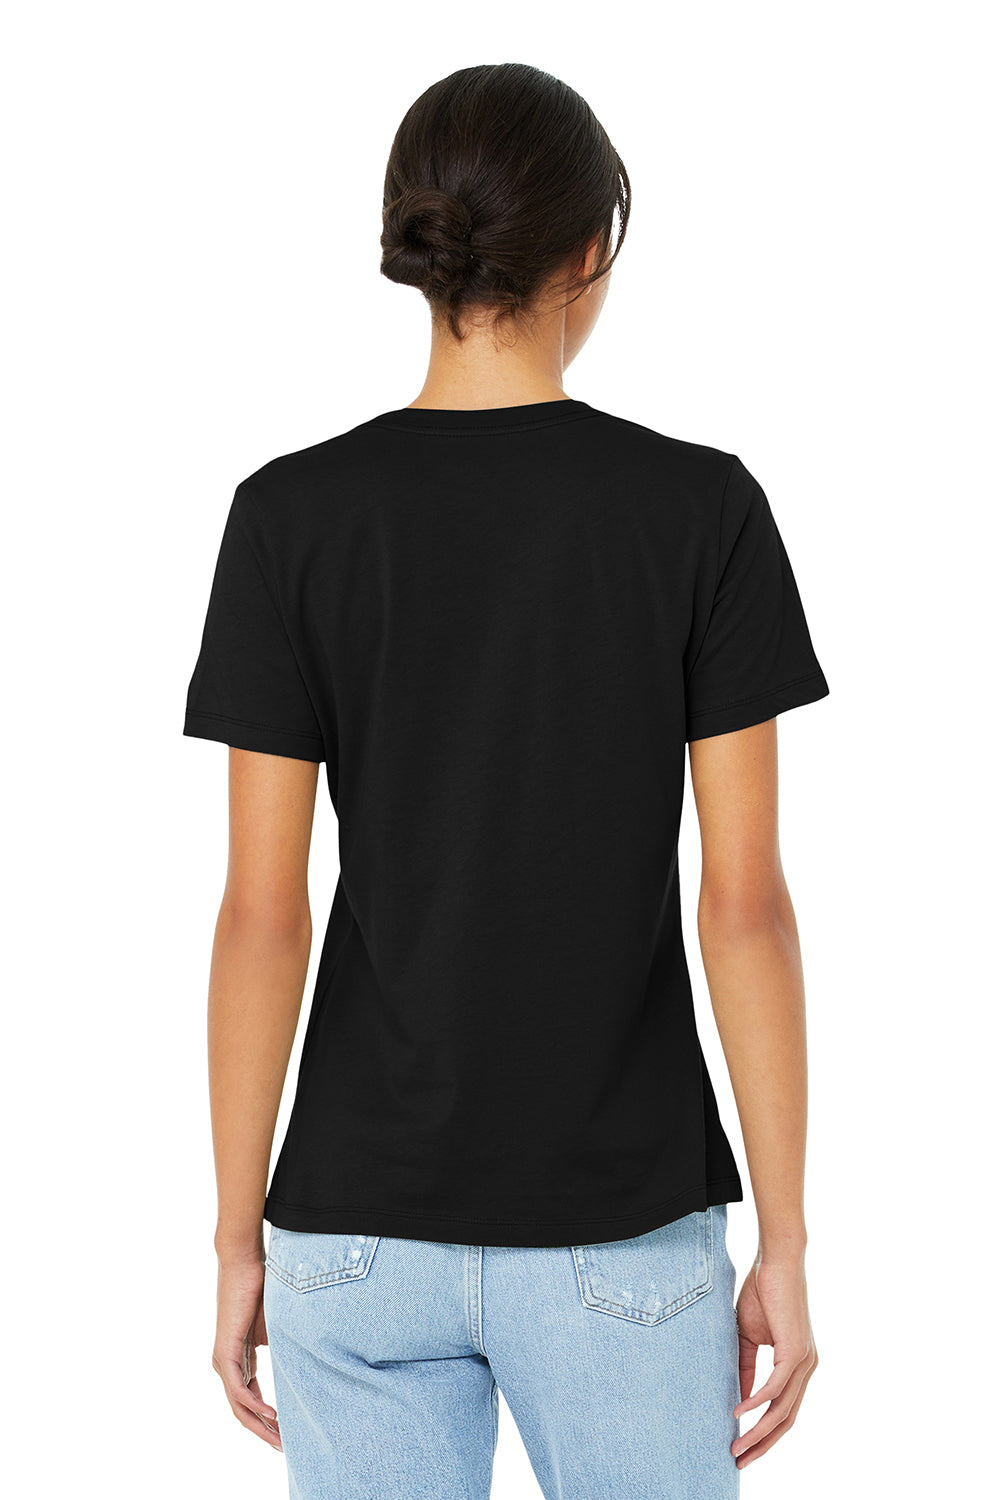 Bella + Canvas BC6400/B6400/6400 Womens Relaxed Jersey Short Sleeve Crewneck T-Shirt Black Model Back